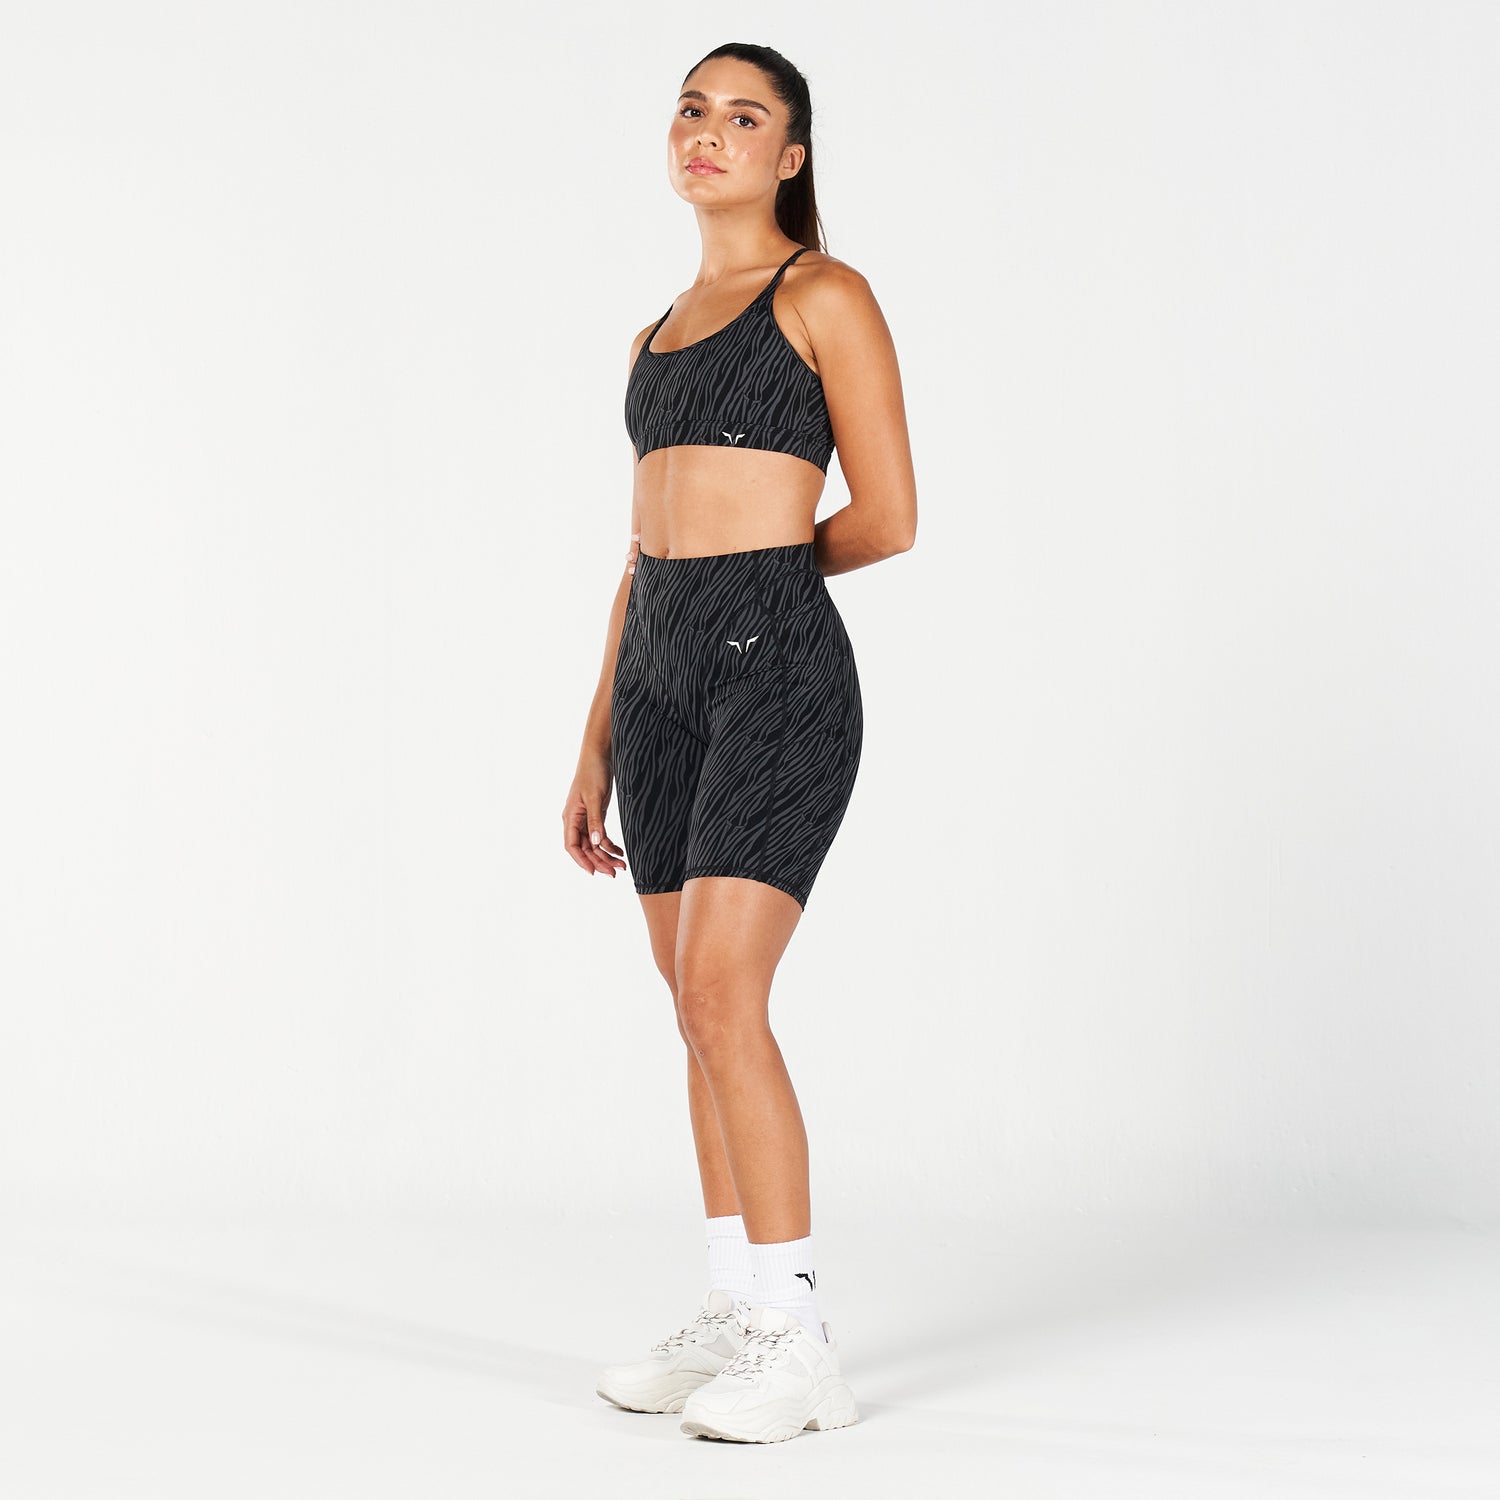 squatwolf-workout-clothes-core-wild-print-biker-shorts-black-gym-shorts-for-women